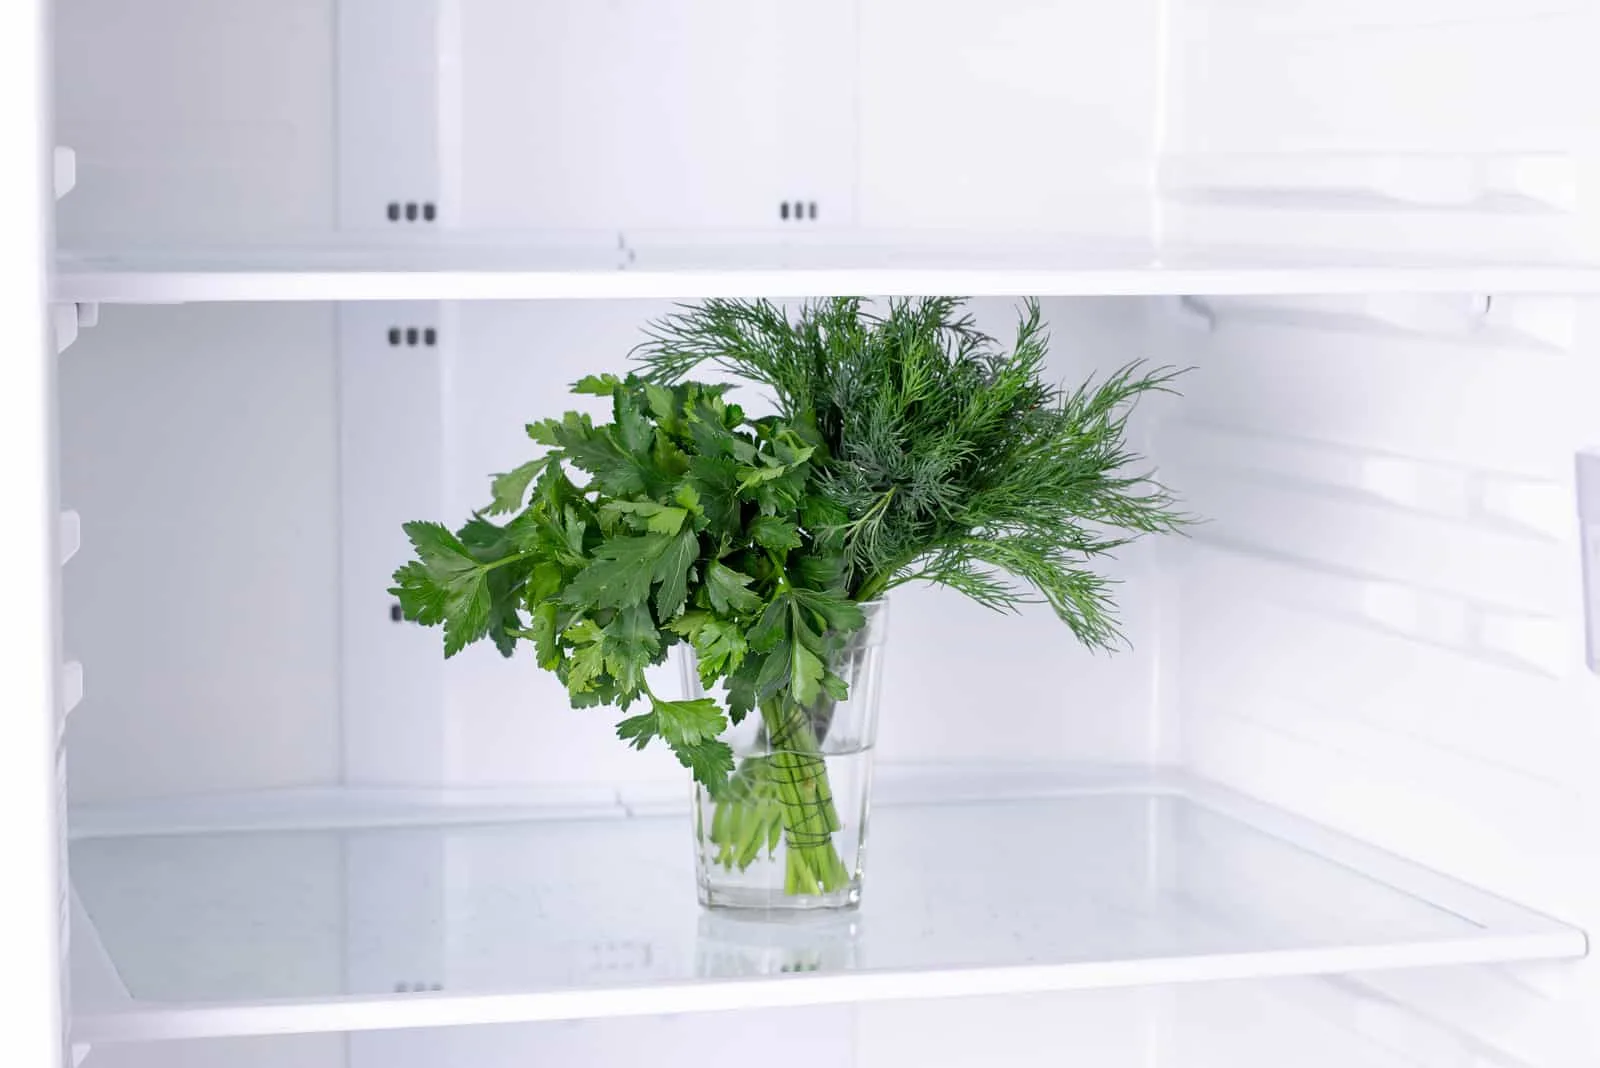 parsley in a refrigerator